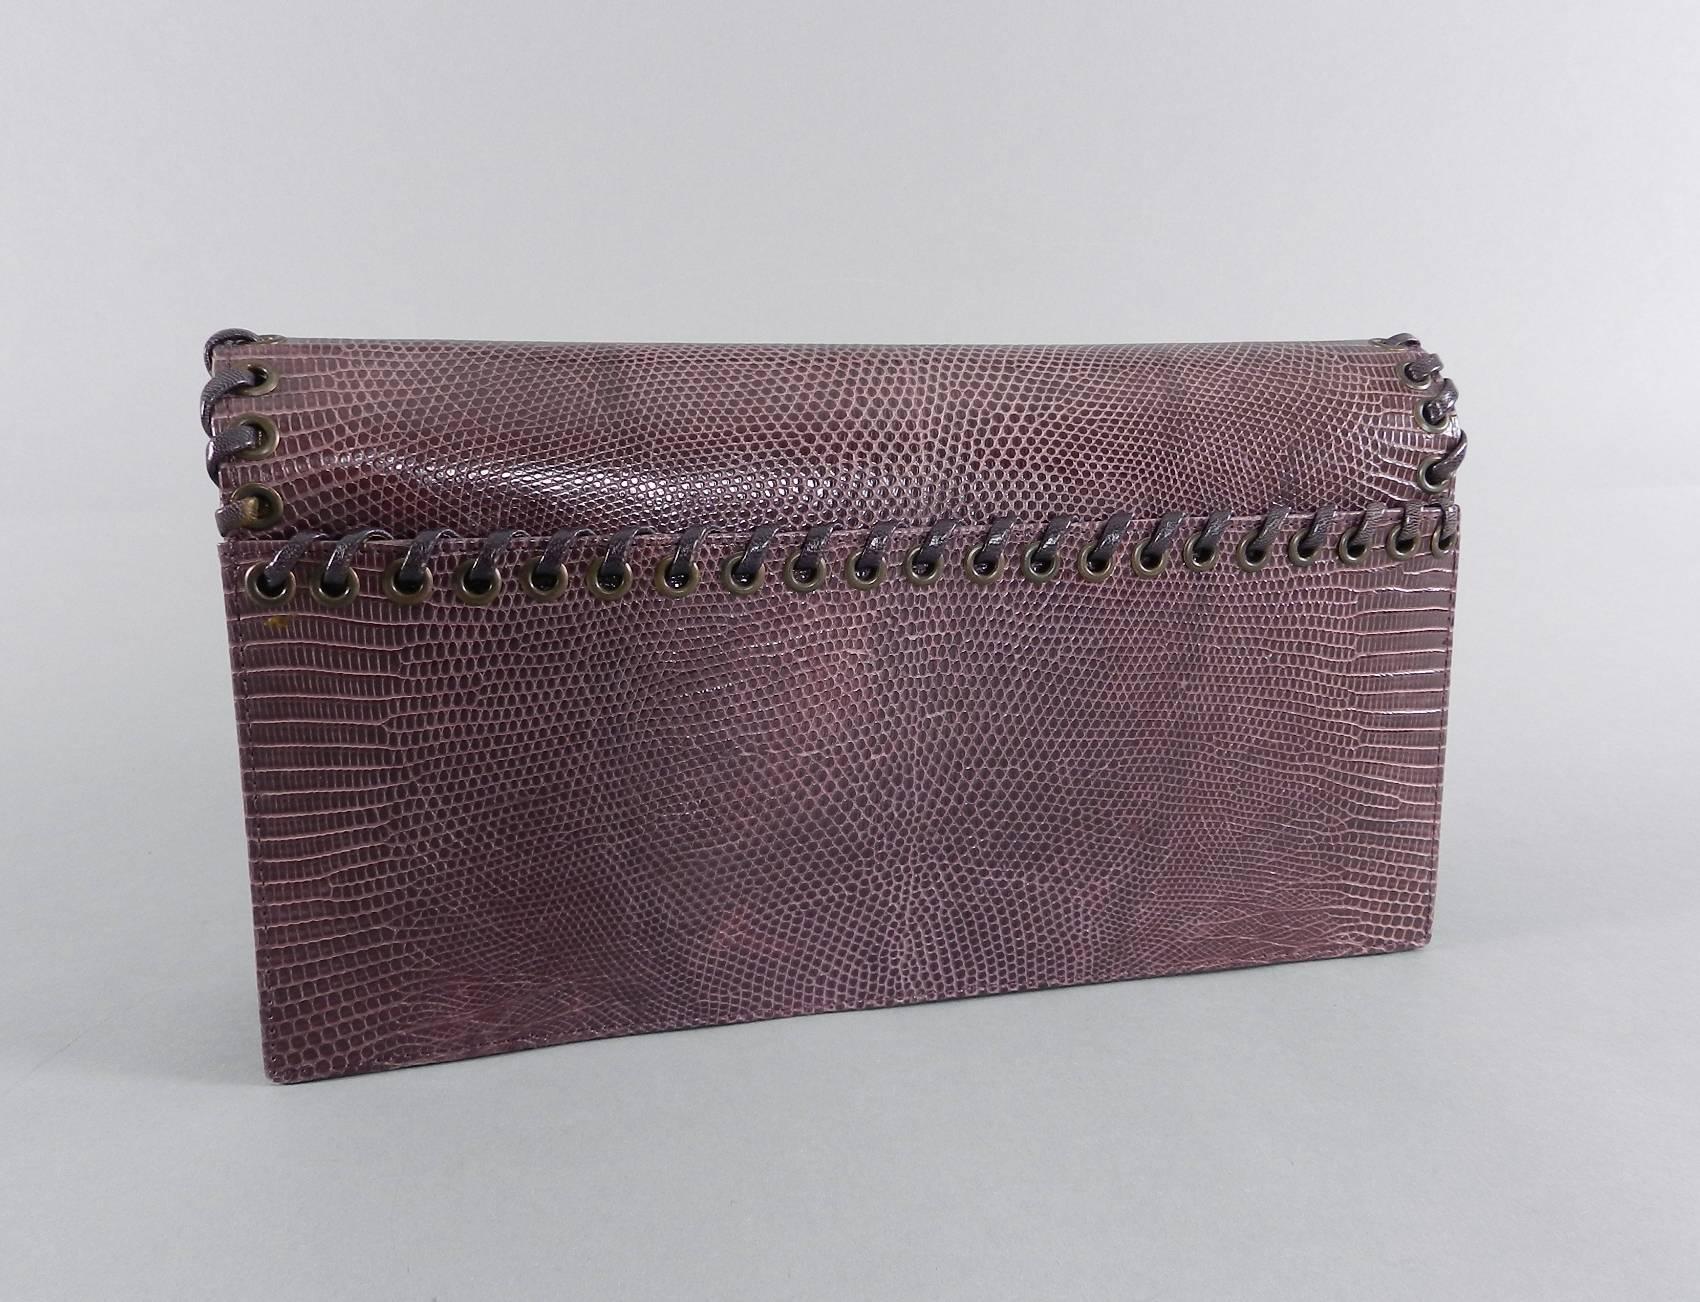 Yves Saint Laurent haute couture Purple Lizard and Amethyst clutch purse 3